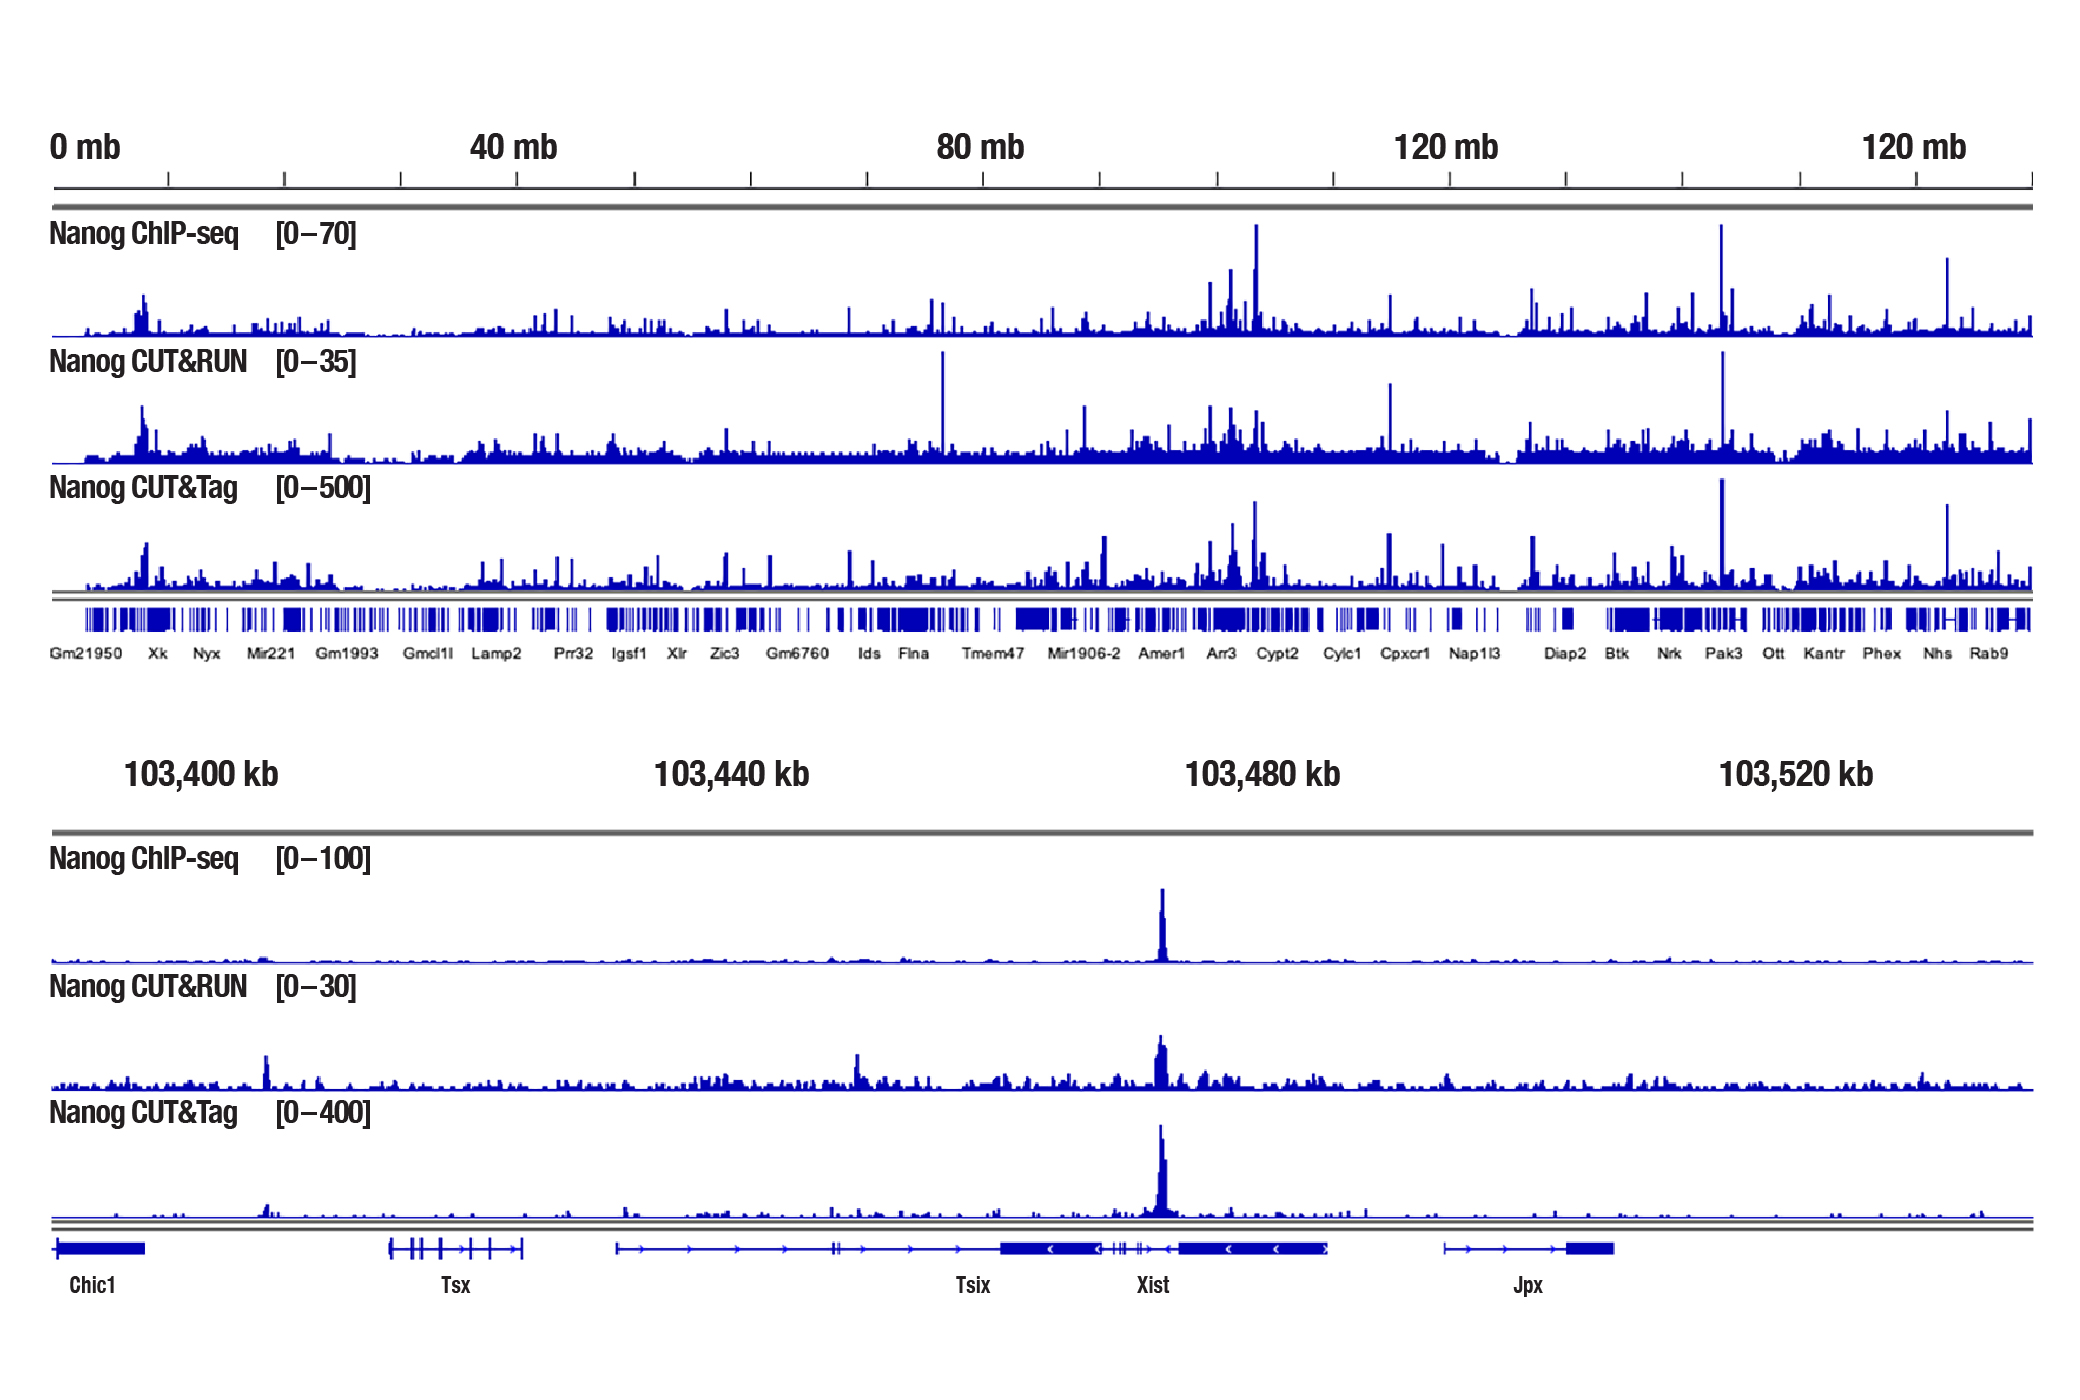 Nanog sequencing results for ChIP-seq, CUT&RUN, and CUT&Tag